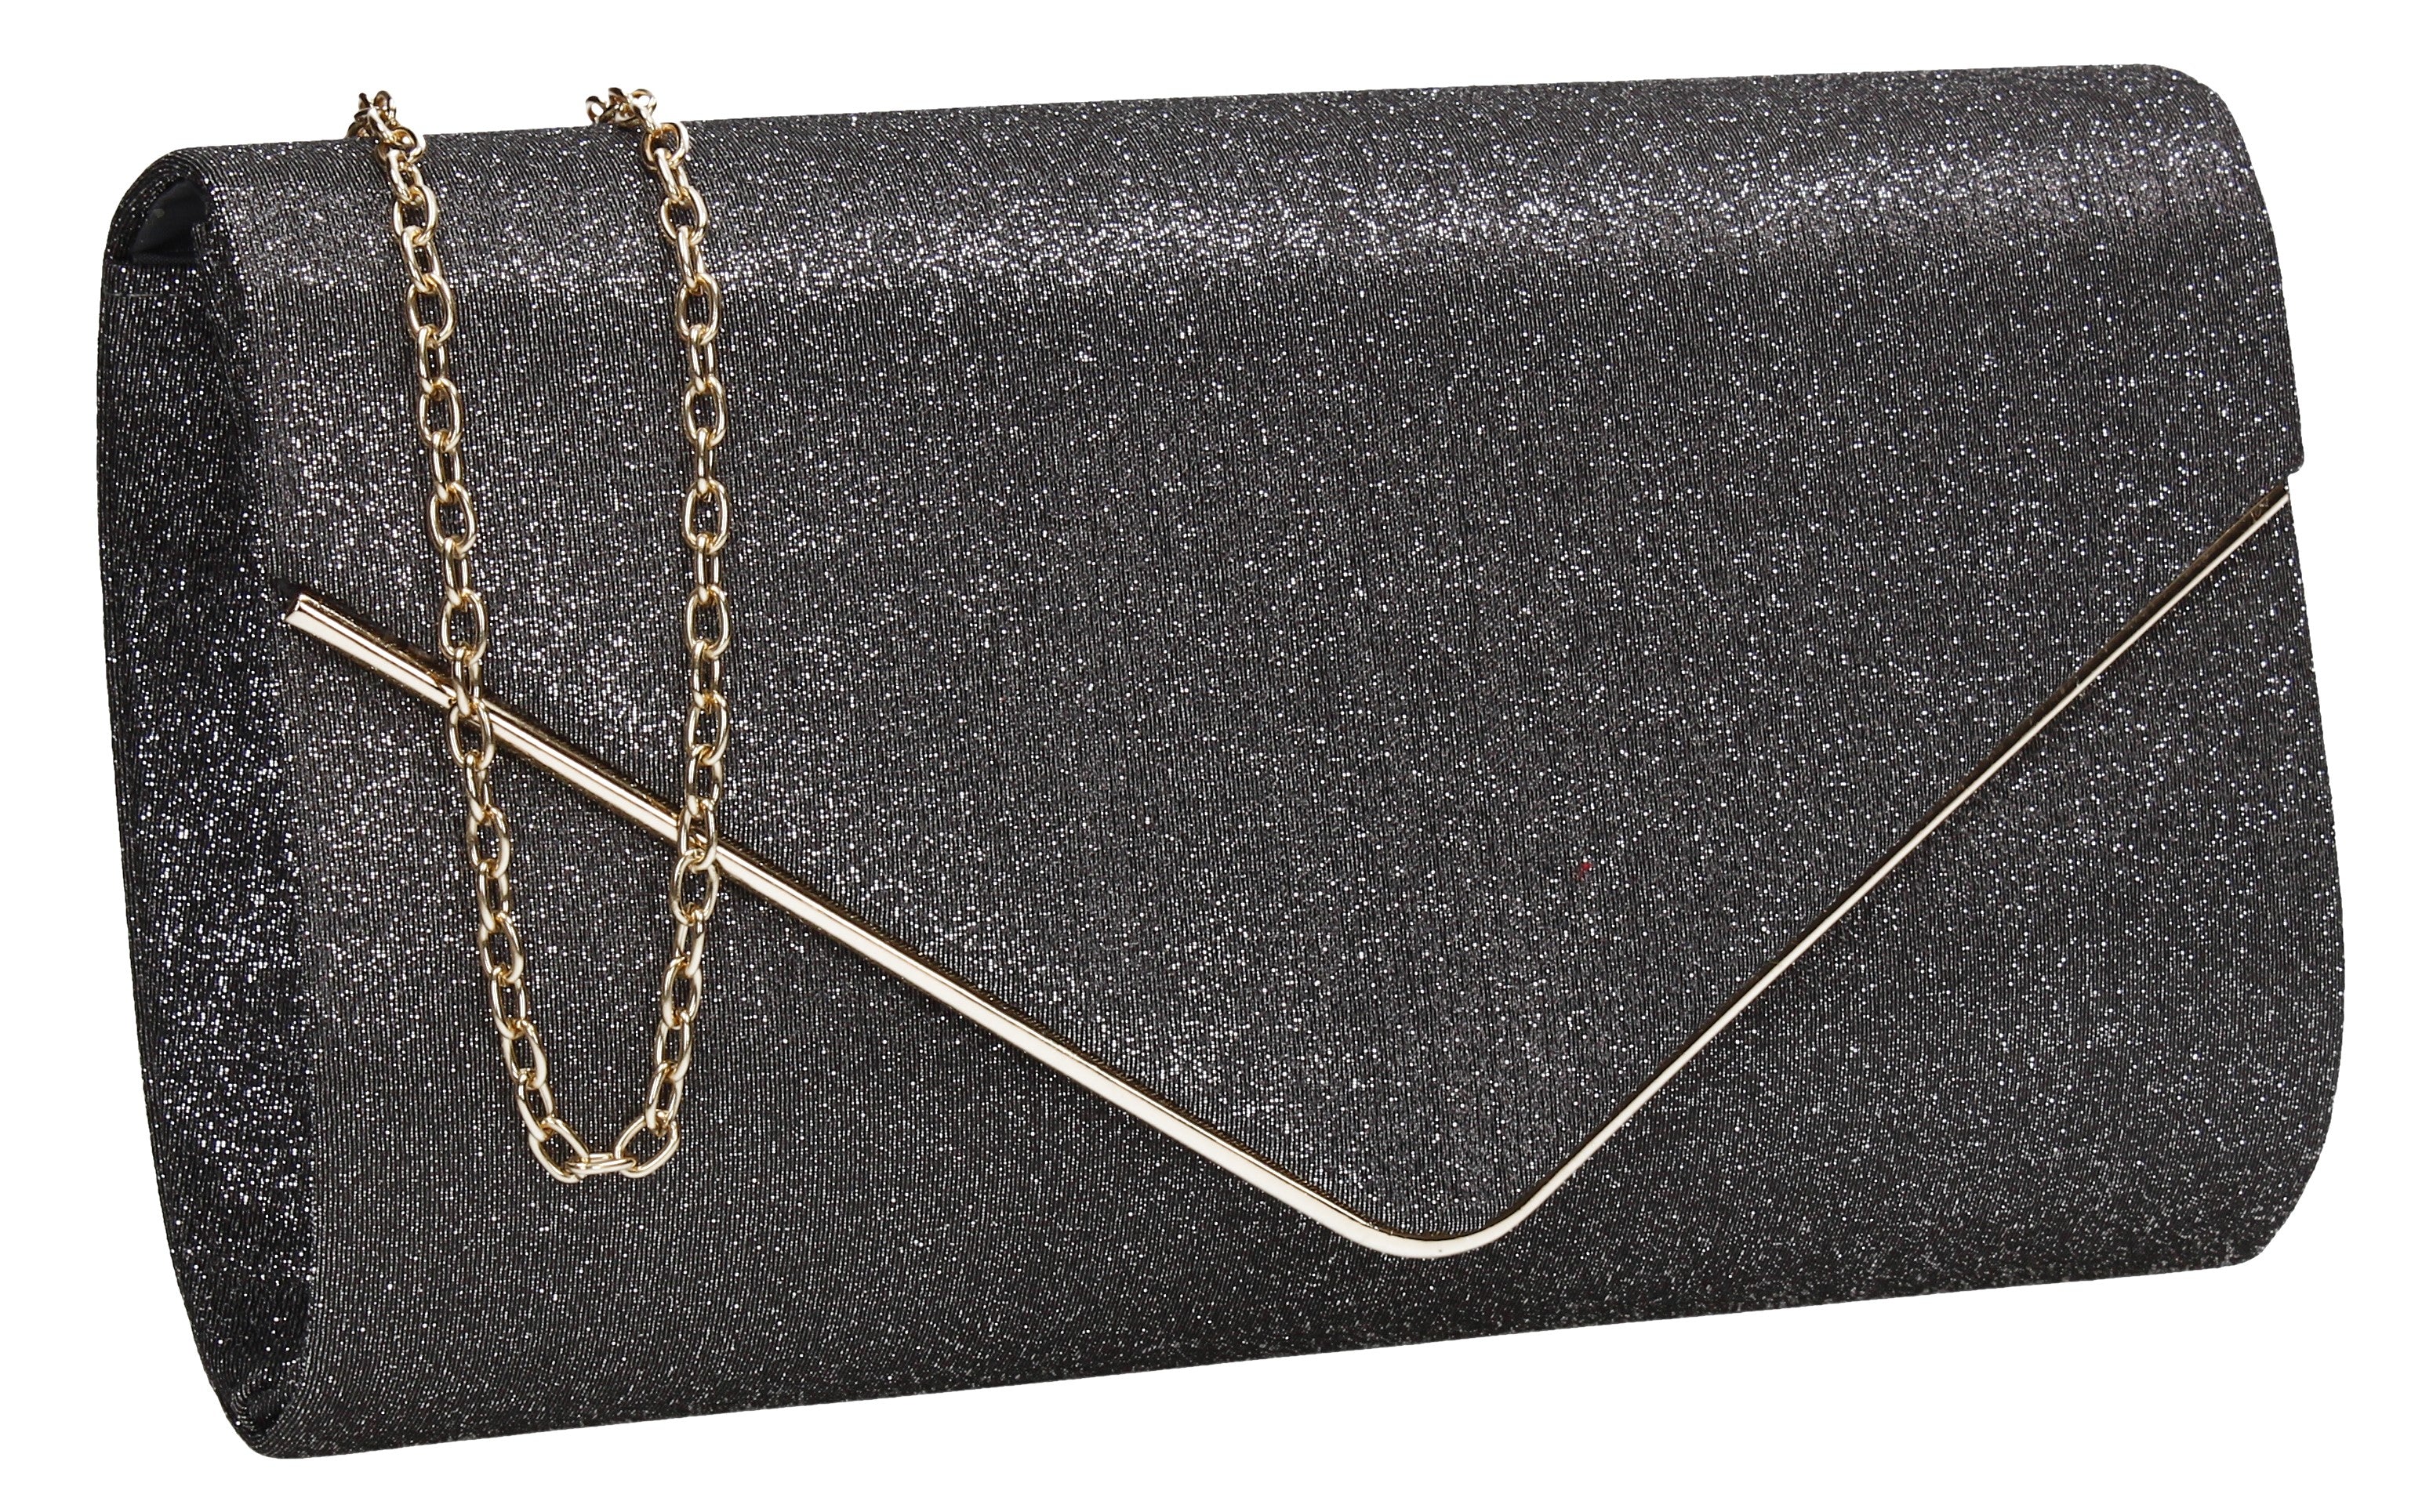 Lancel LISON DE TOTE - Handbag - camel - Zalando.co.uk | Fall bags  handbags, Fall handbag trends, Fall handbags